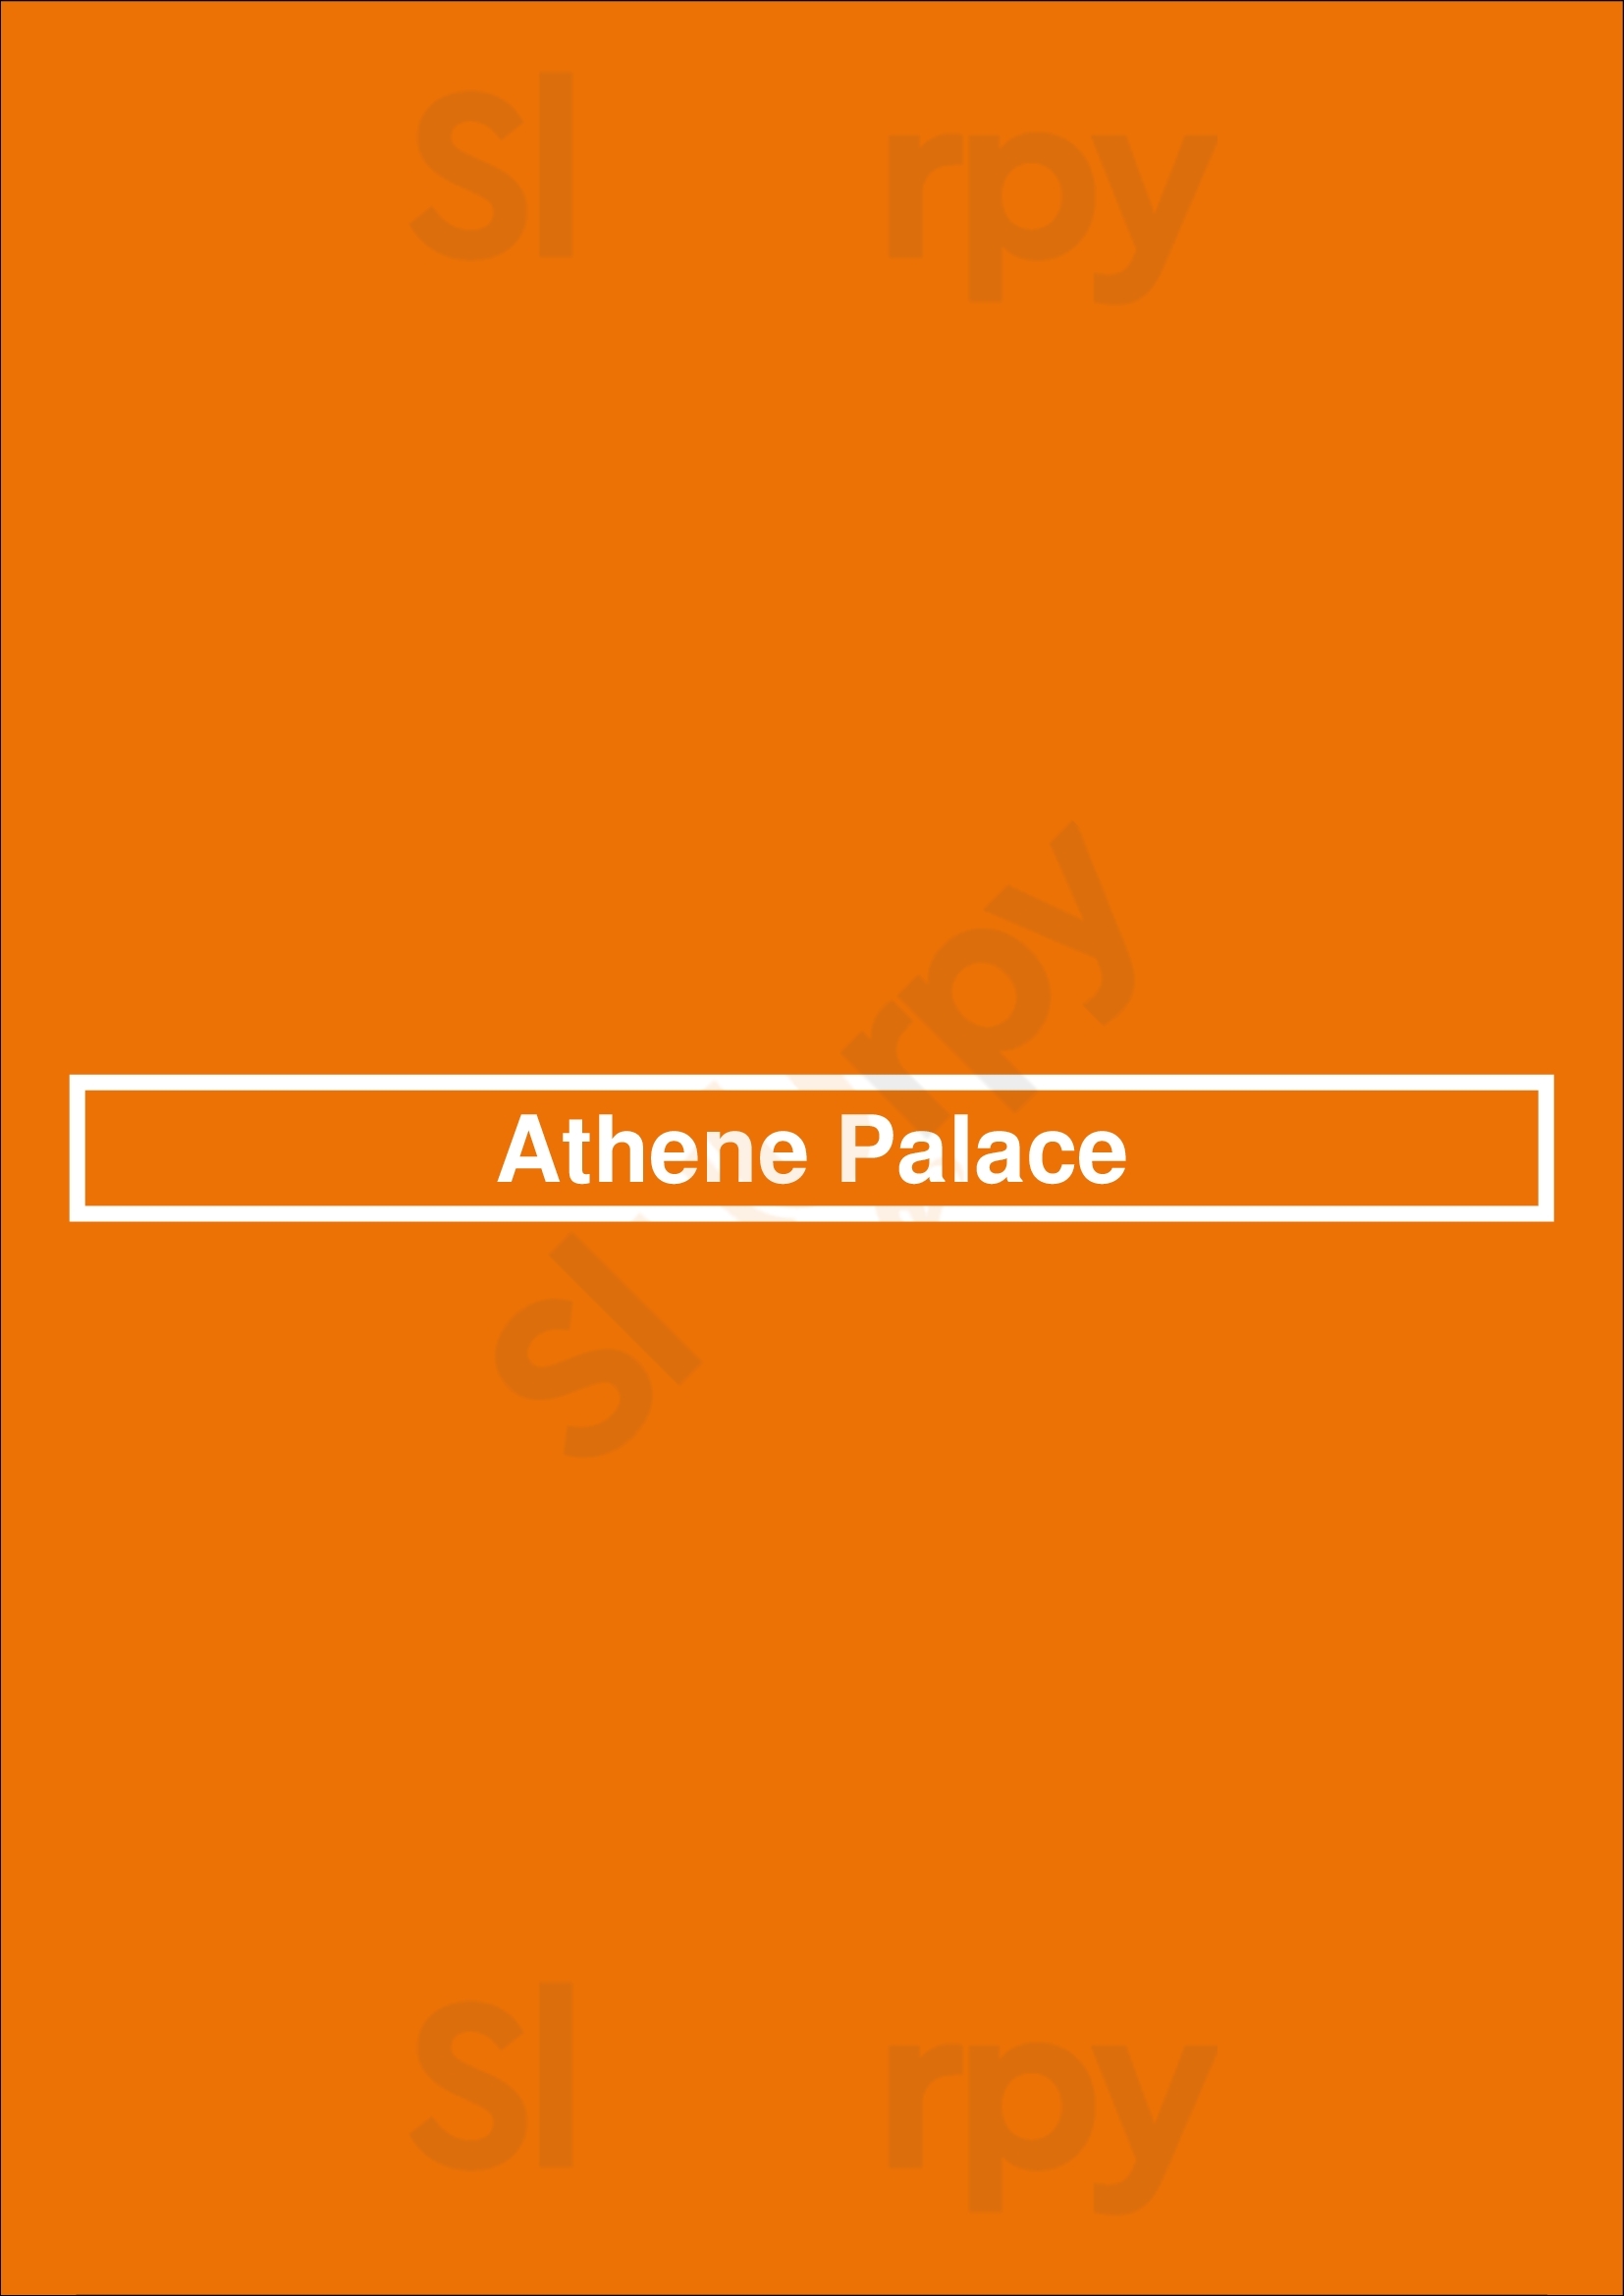 Athene Palace Den Haag Menu - 1